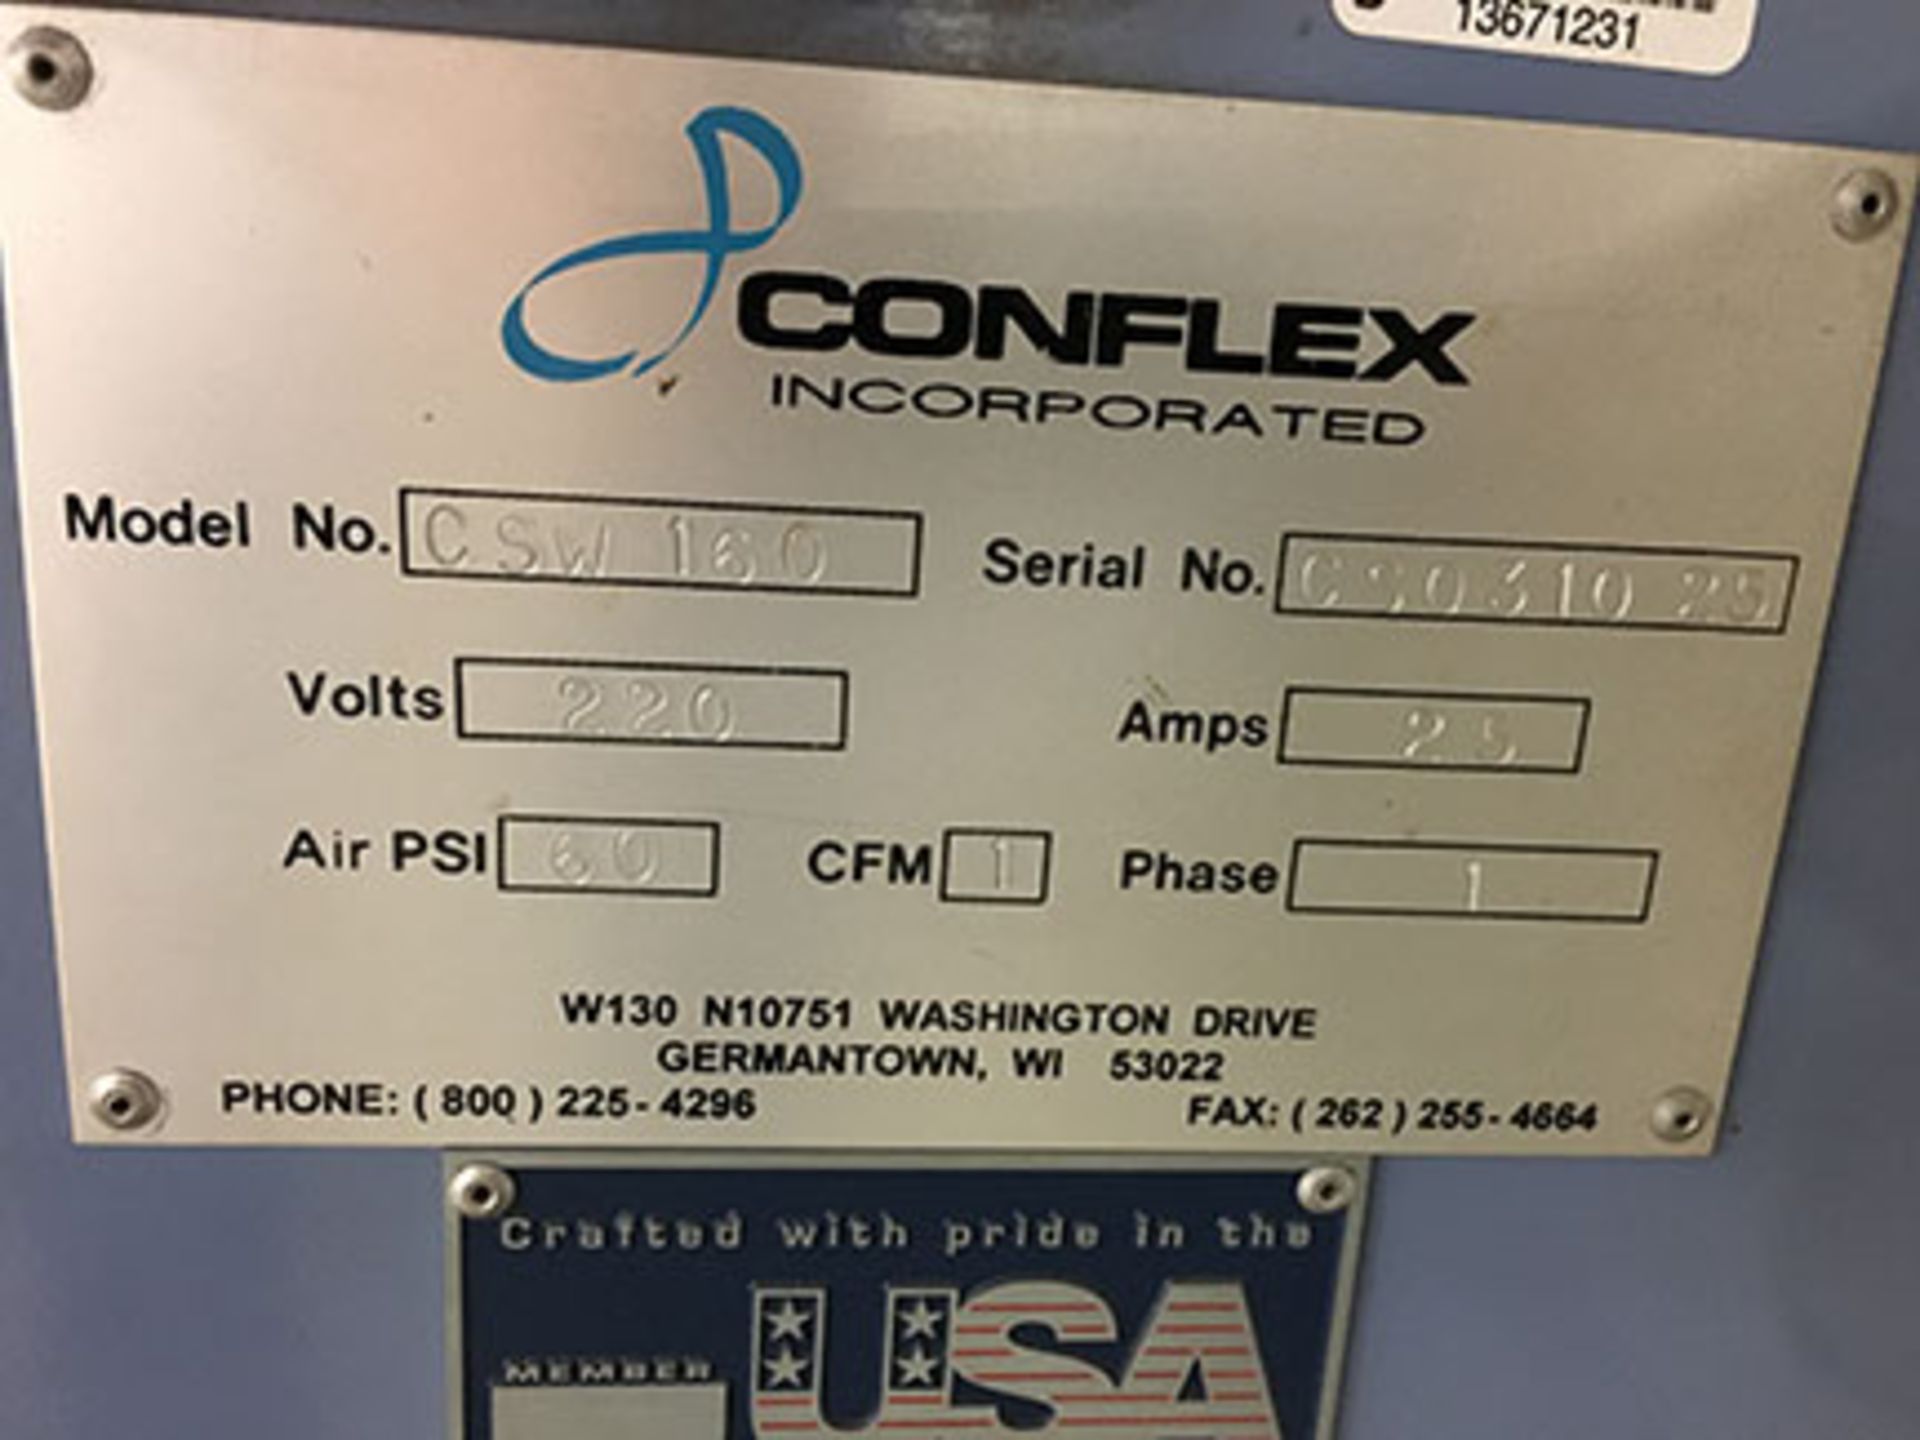 CONFLEX L BAR SEALER; MODEL CSW-160, S/N CS03102, 220 VOLT, 25 AMP, 60 AIR PSI, 1 CFM, SINGLE PHASE - Image 7 of 7